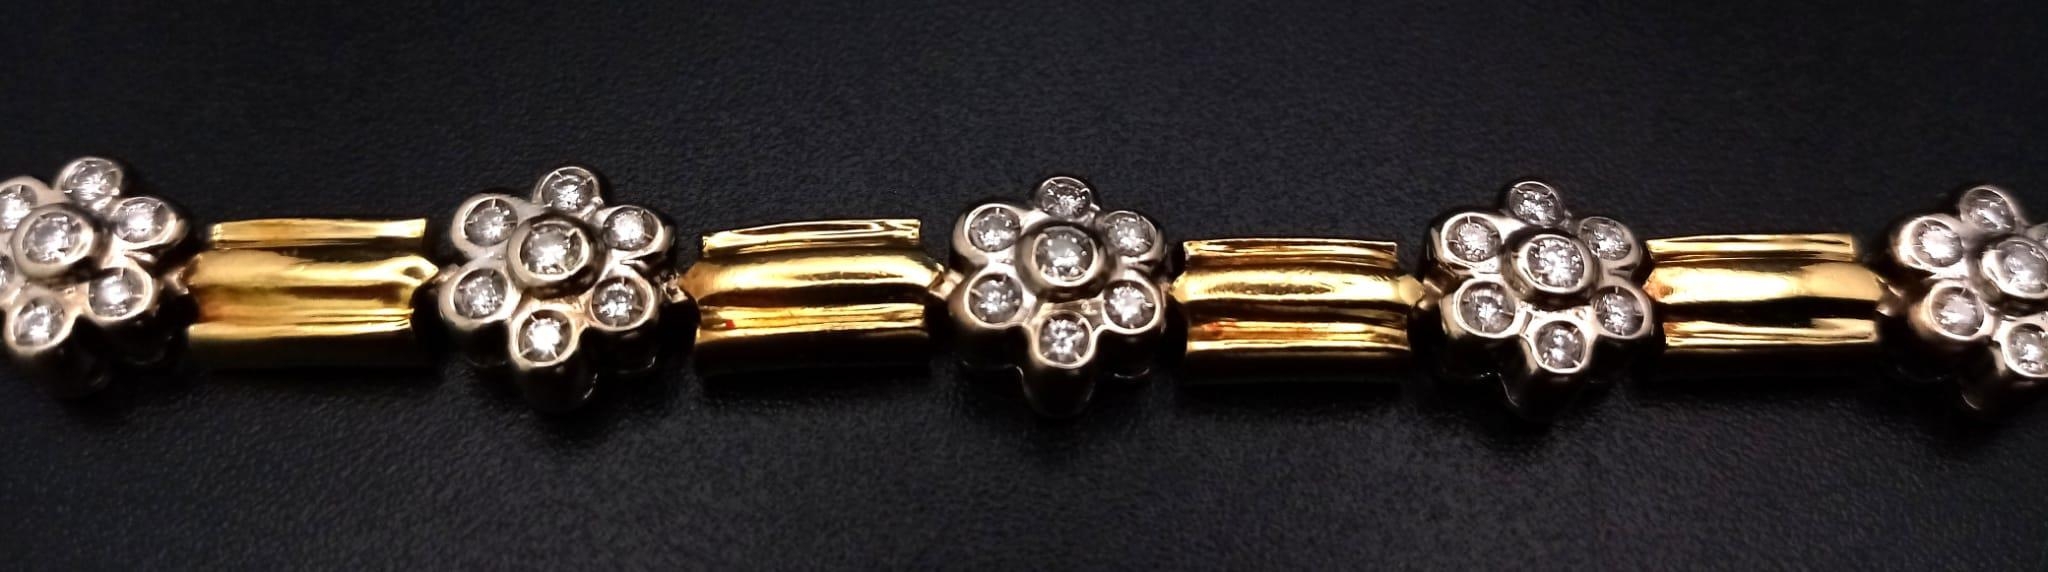 A BEAUTIFUL 18K YELLOW GOLD DIAMOND SET BRACELET, WITH APPROX 0.85CT DIAMONDS FORMING FLOWER PATTERS - Bild 3 aus 5